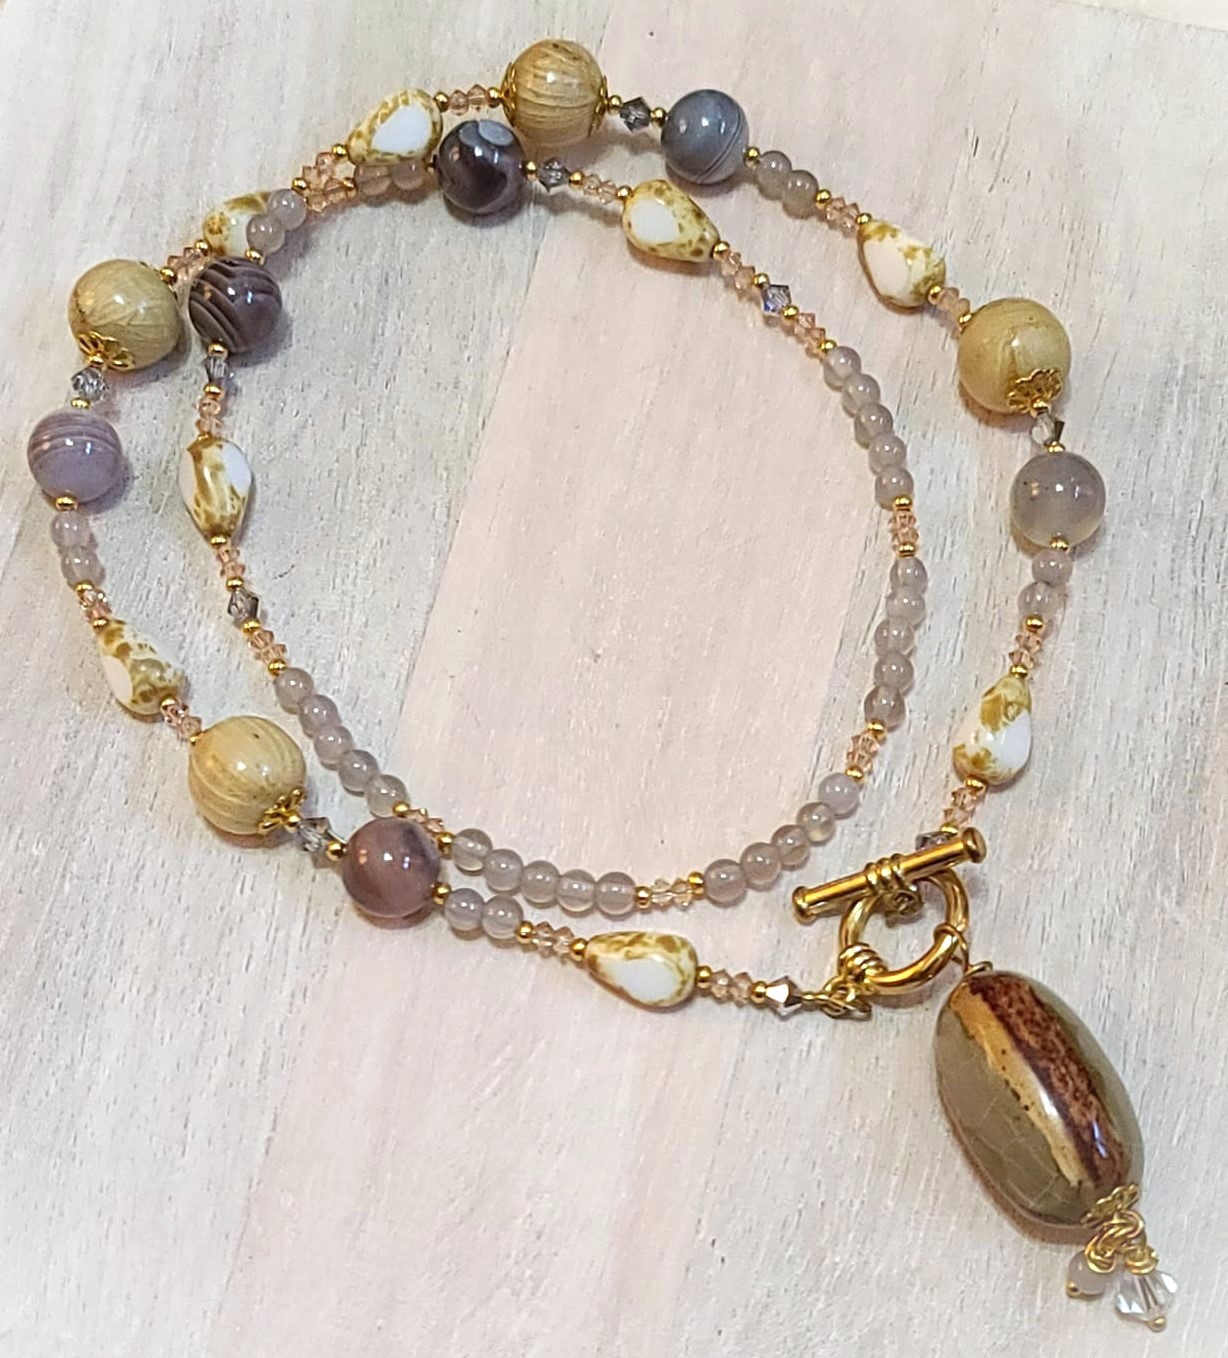 Gemstone lariat necklace, agate gemstone, crystals, handcrafted